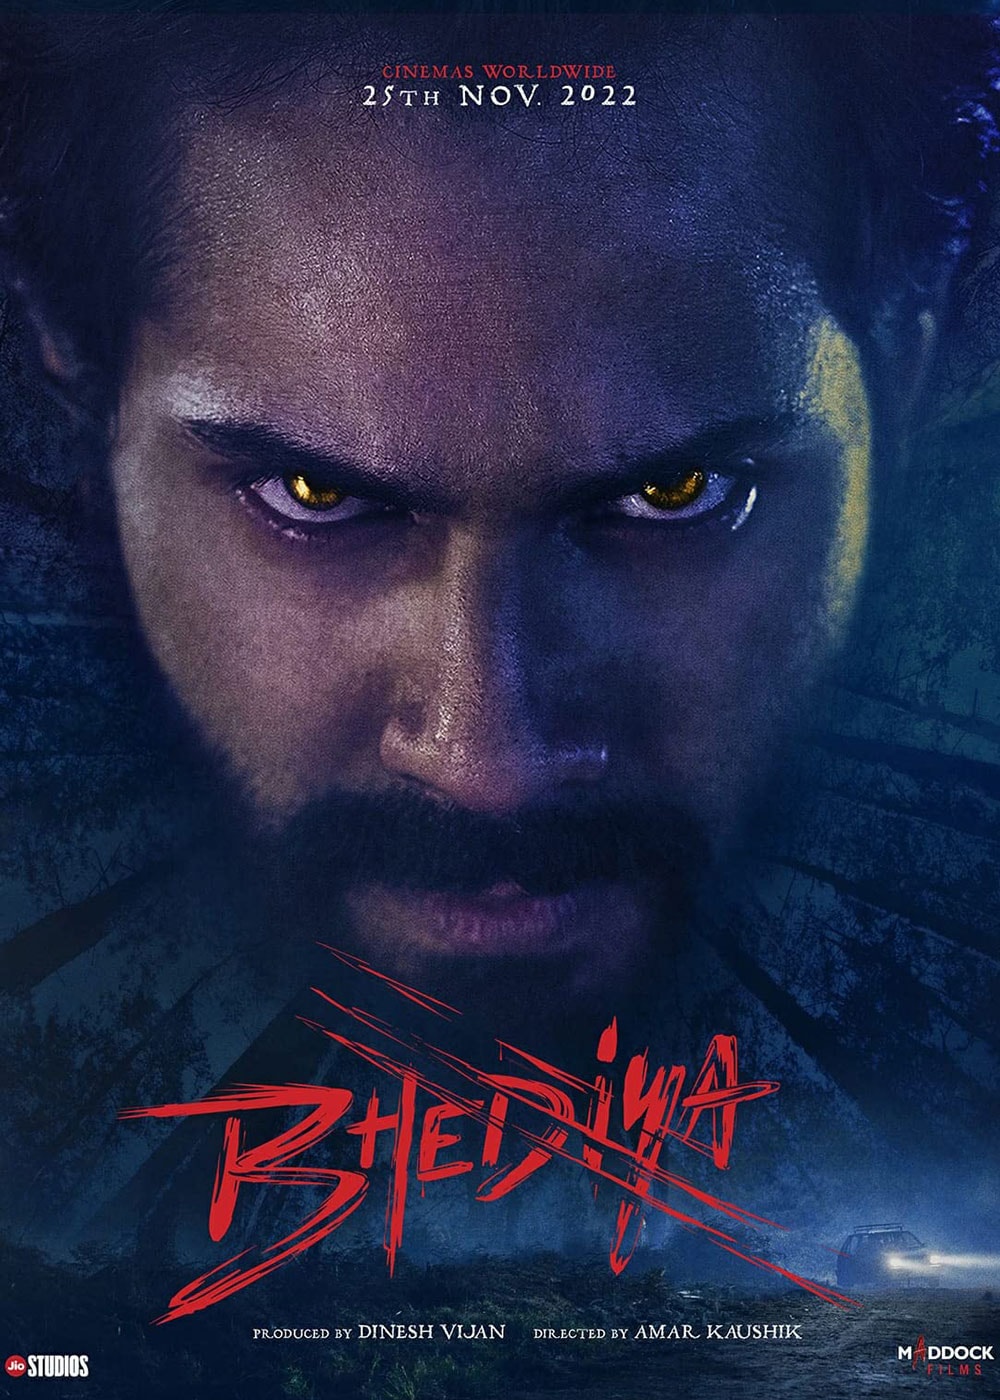 Bhediya Release Date Star Cast Trailer Budget Poster And More Updates Gambaran